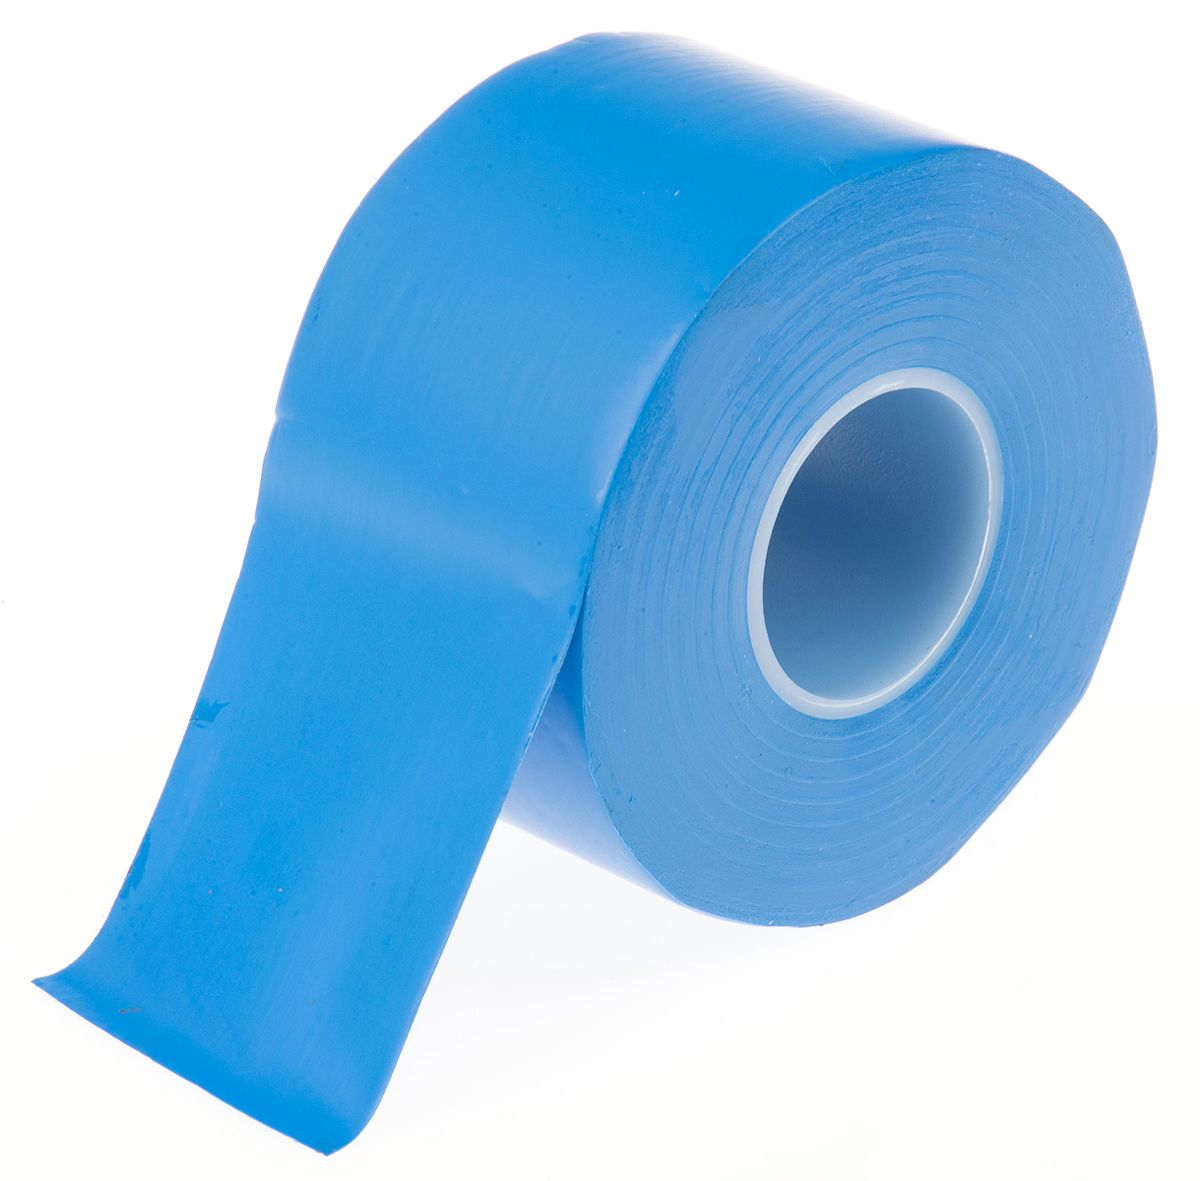 Cinta aislante de PVC Advance Tapes AT7 de color Azul, 38mm x 20m, grosor 0.13mm